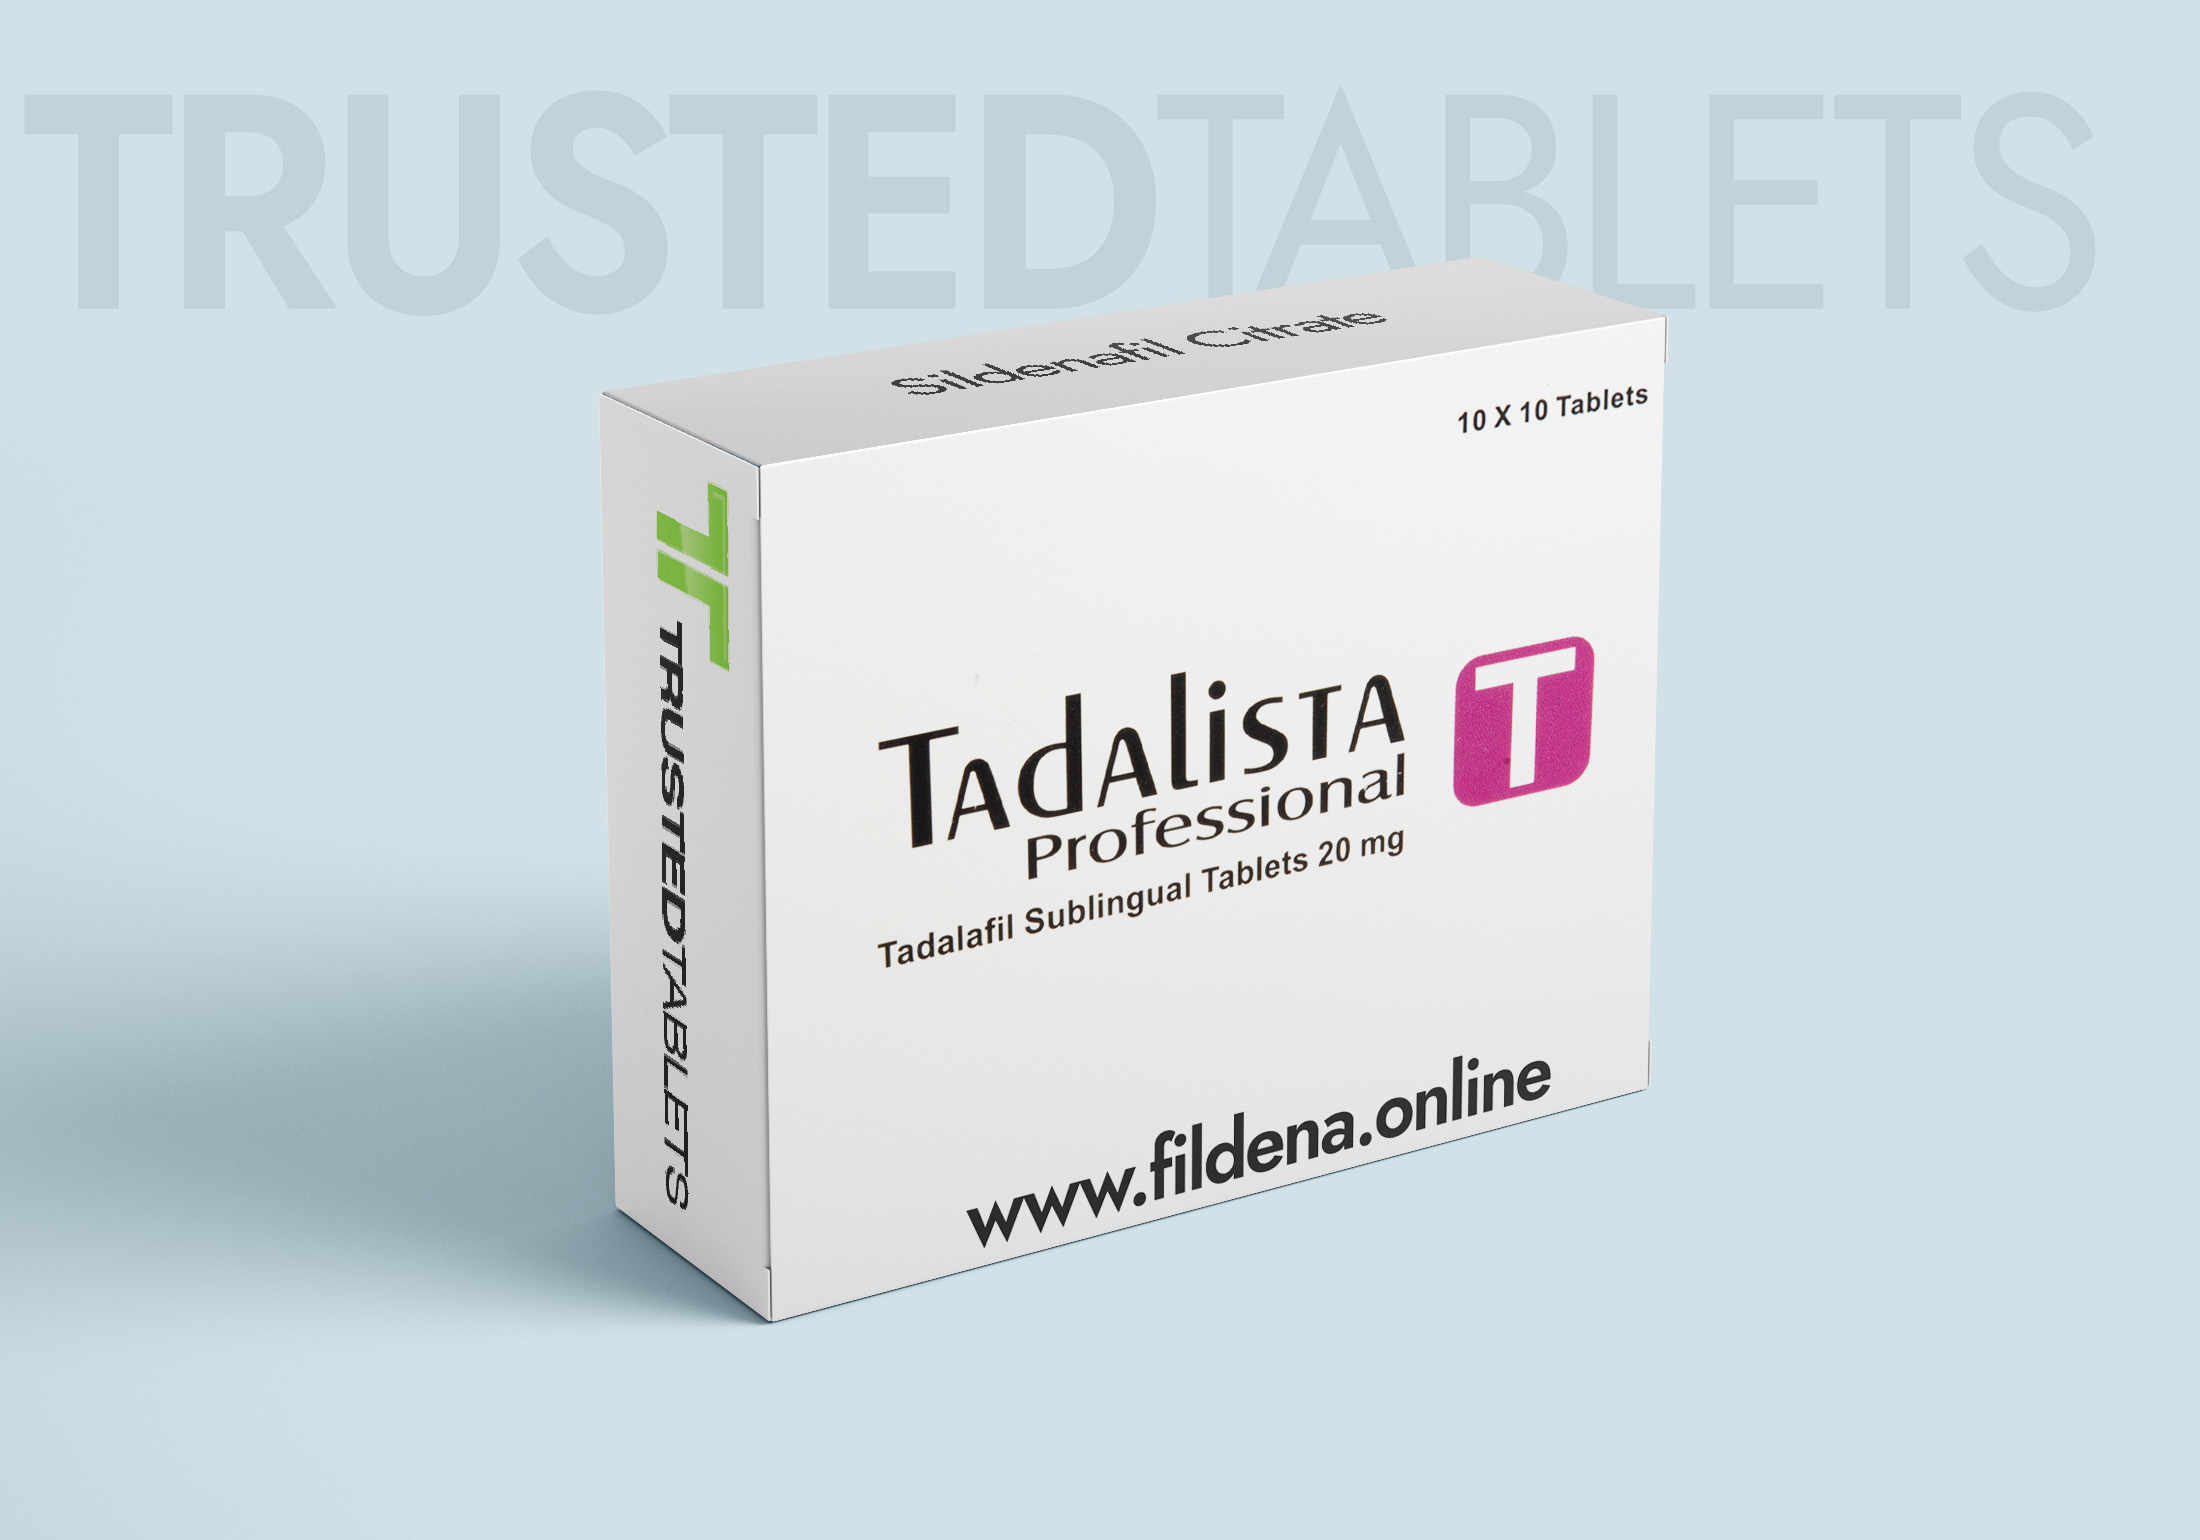 Tadalista Professional TrustedTablets